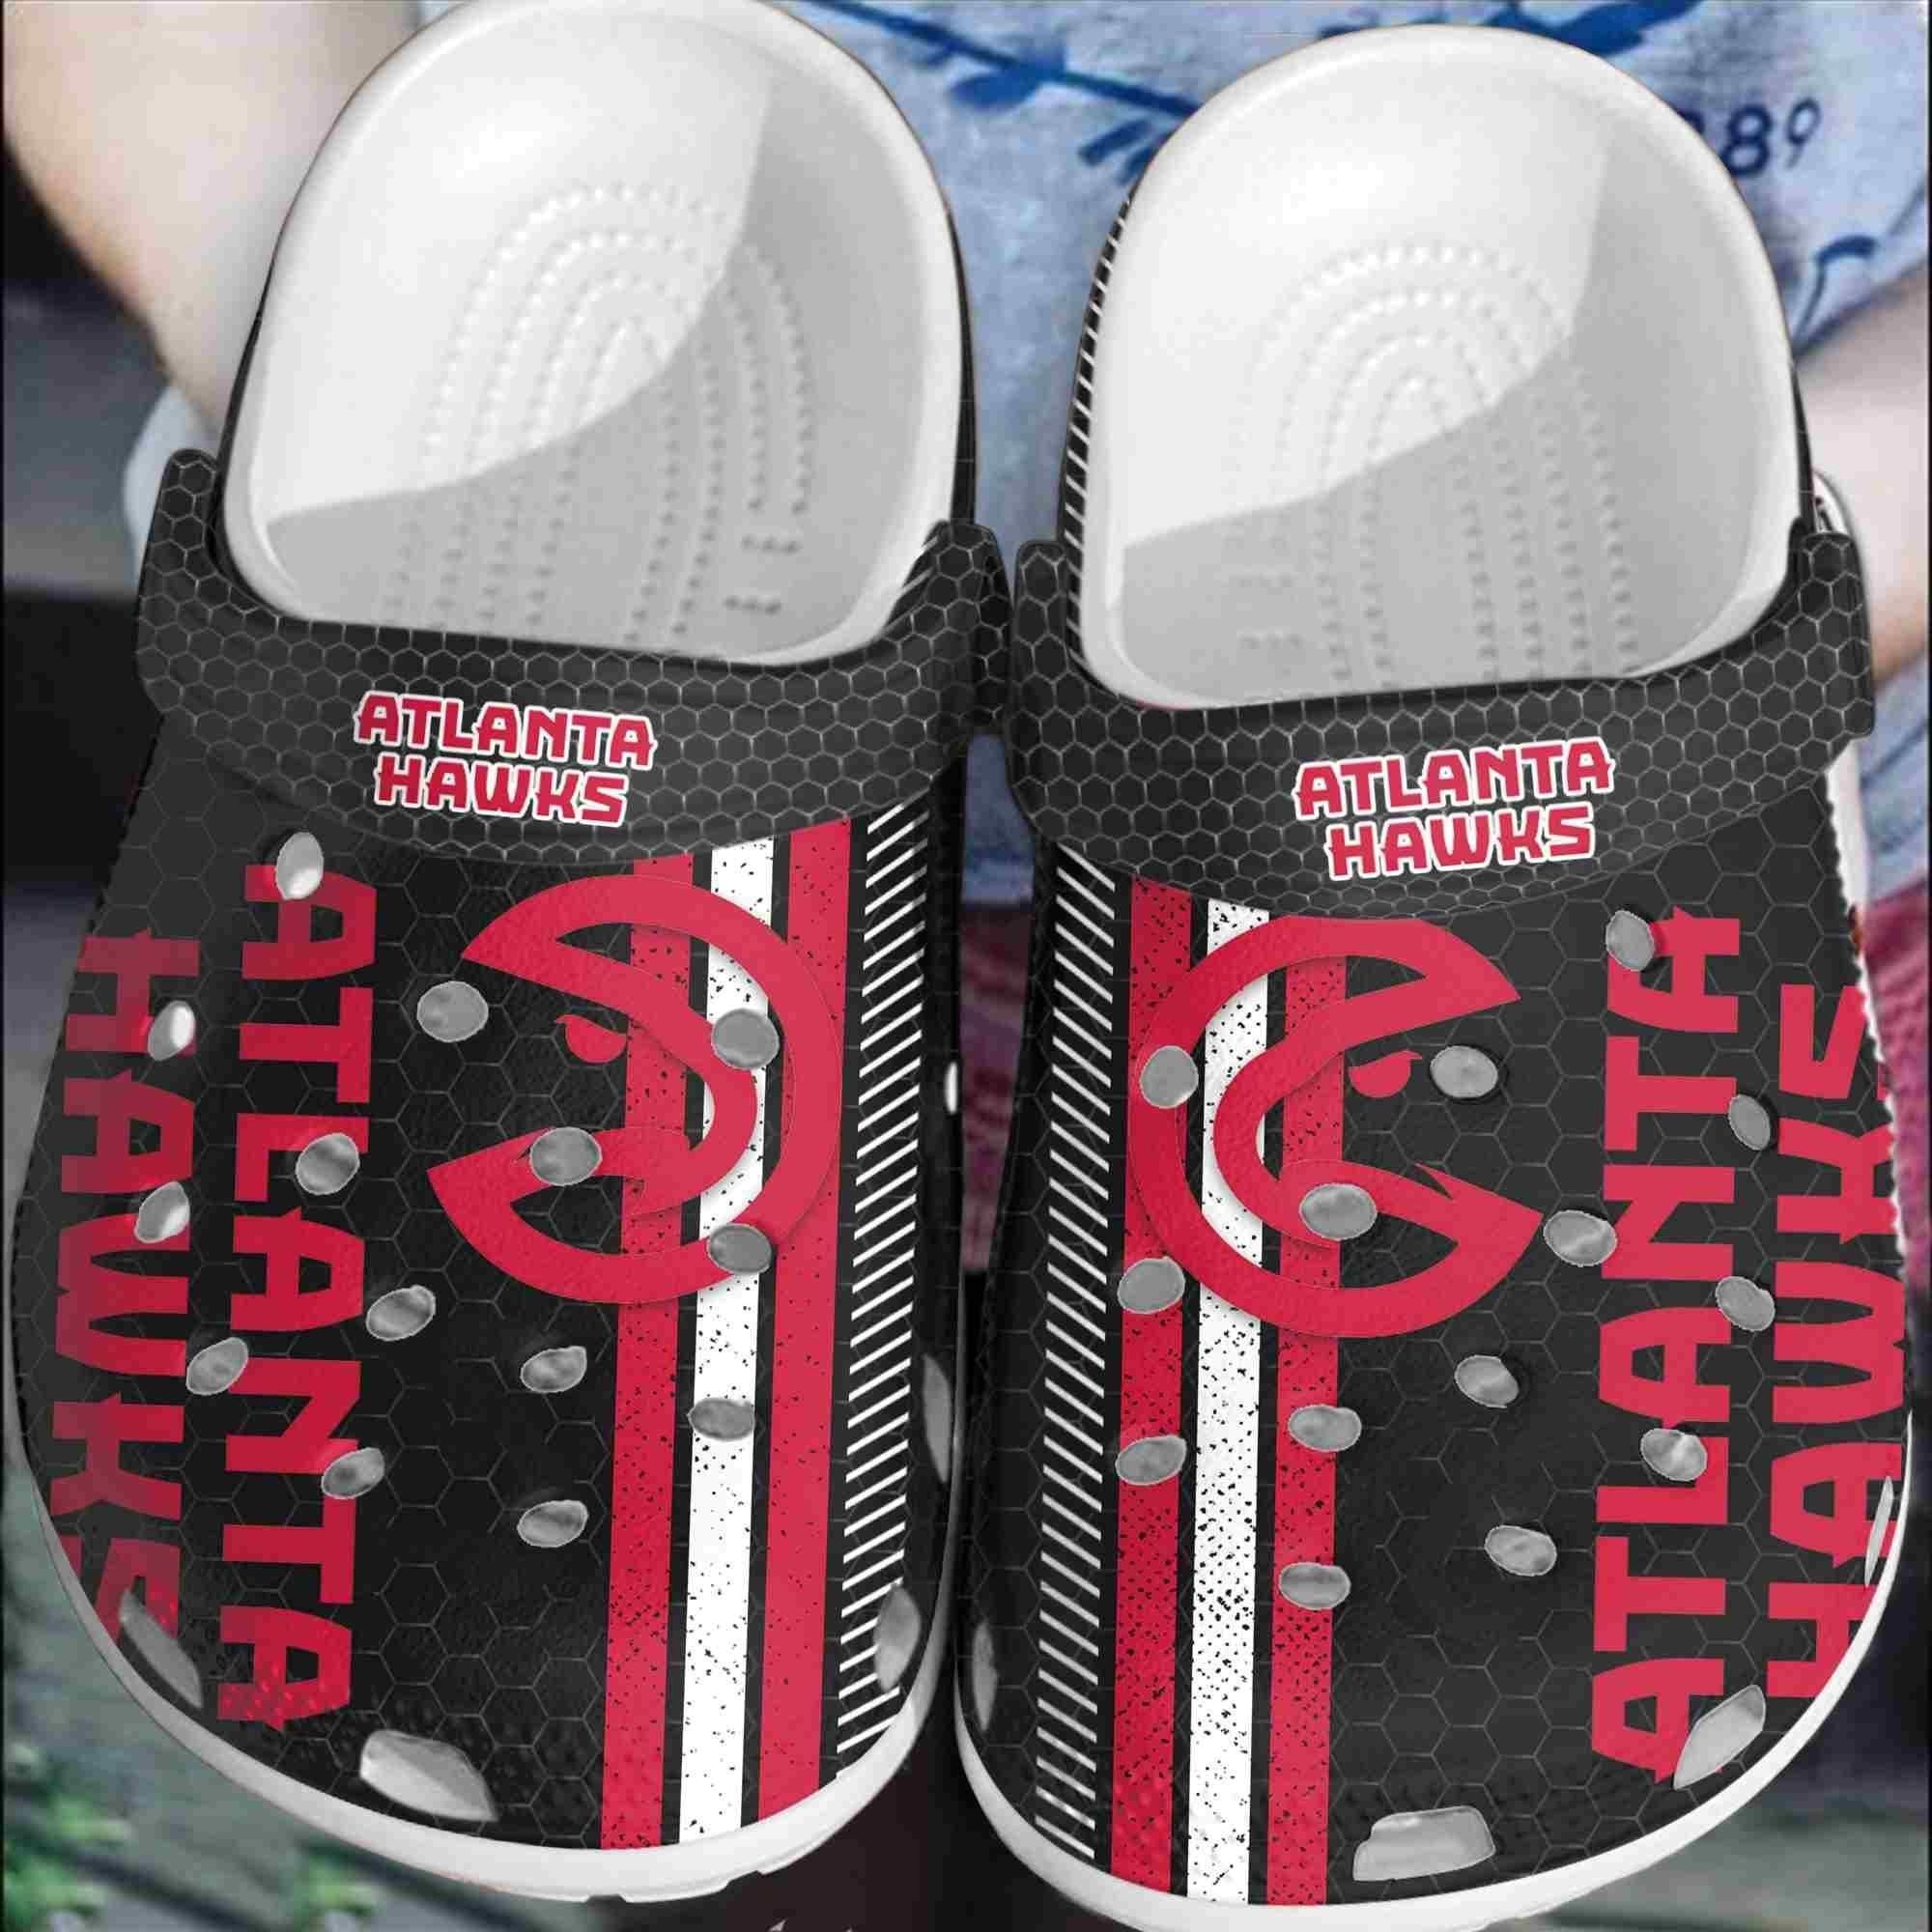 Atlanta Hawks Logo Crocs Shoes - Discover Comfort And Style Clog Shoes ...